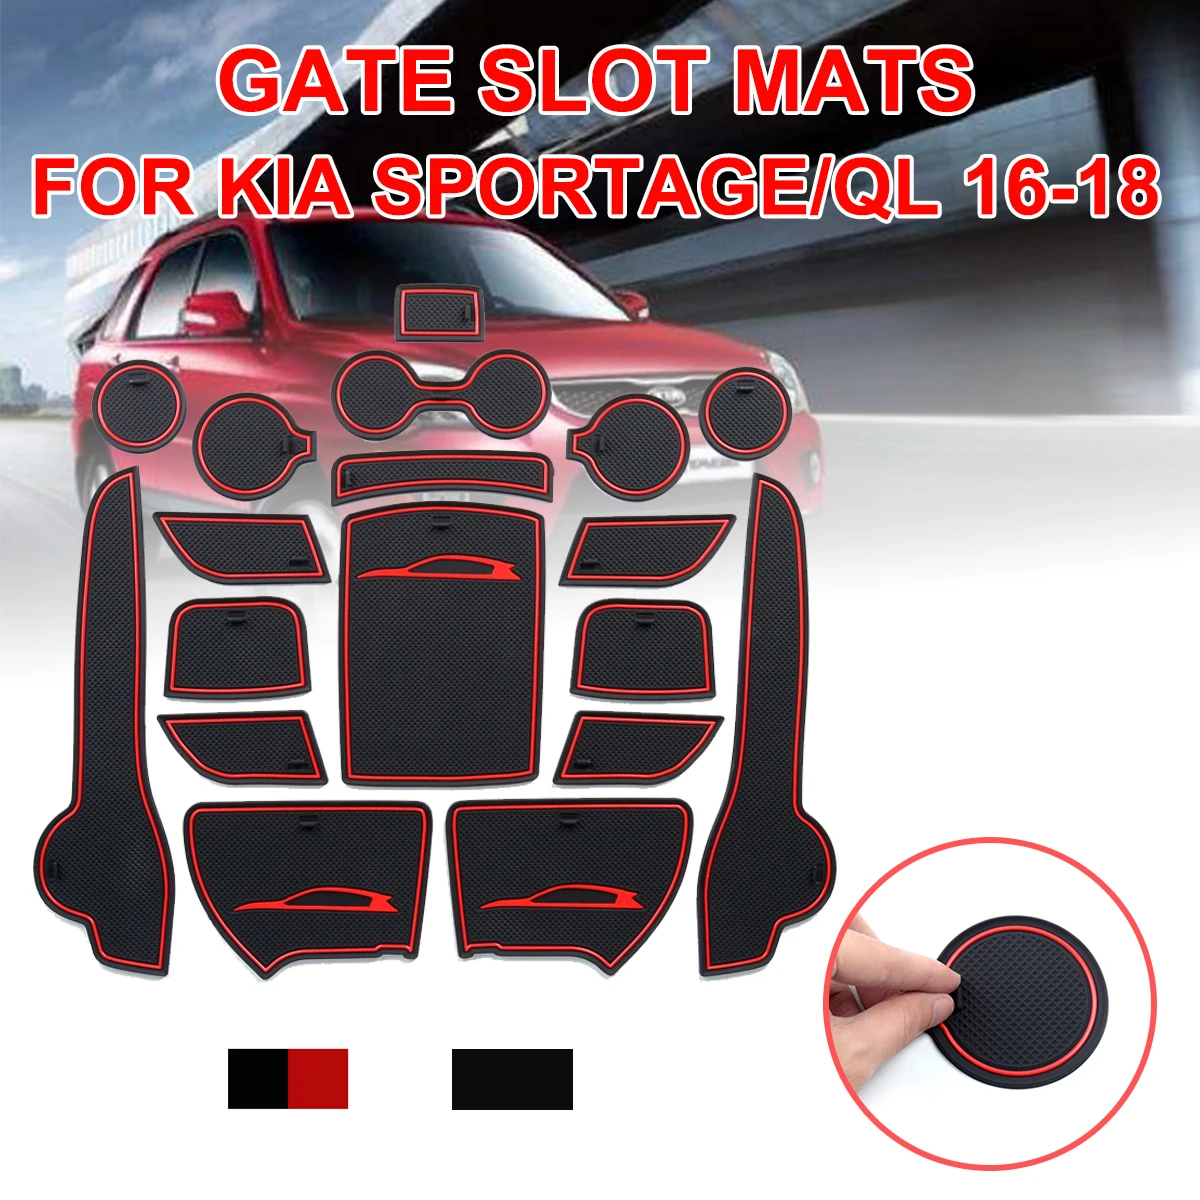 

Car Styling Anti-Slip Rubber Gate Slot Mat Cup Mats Accessories Stickers for KIA Sportage 2016 2017 2018 2019 QL 4th Gen MK4 KX5